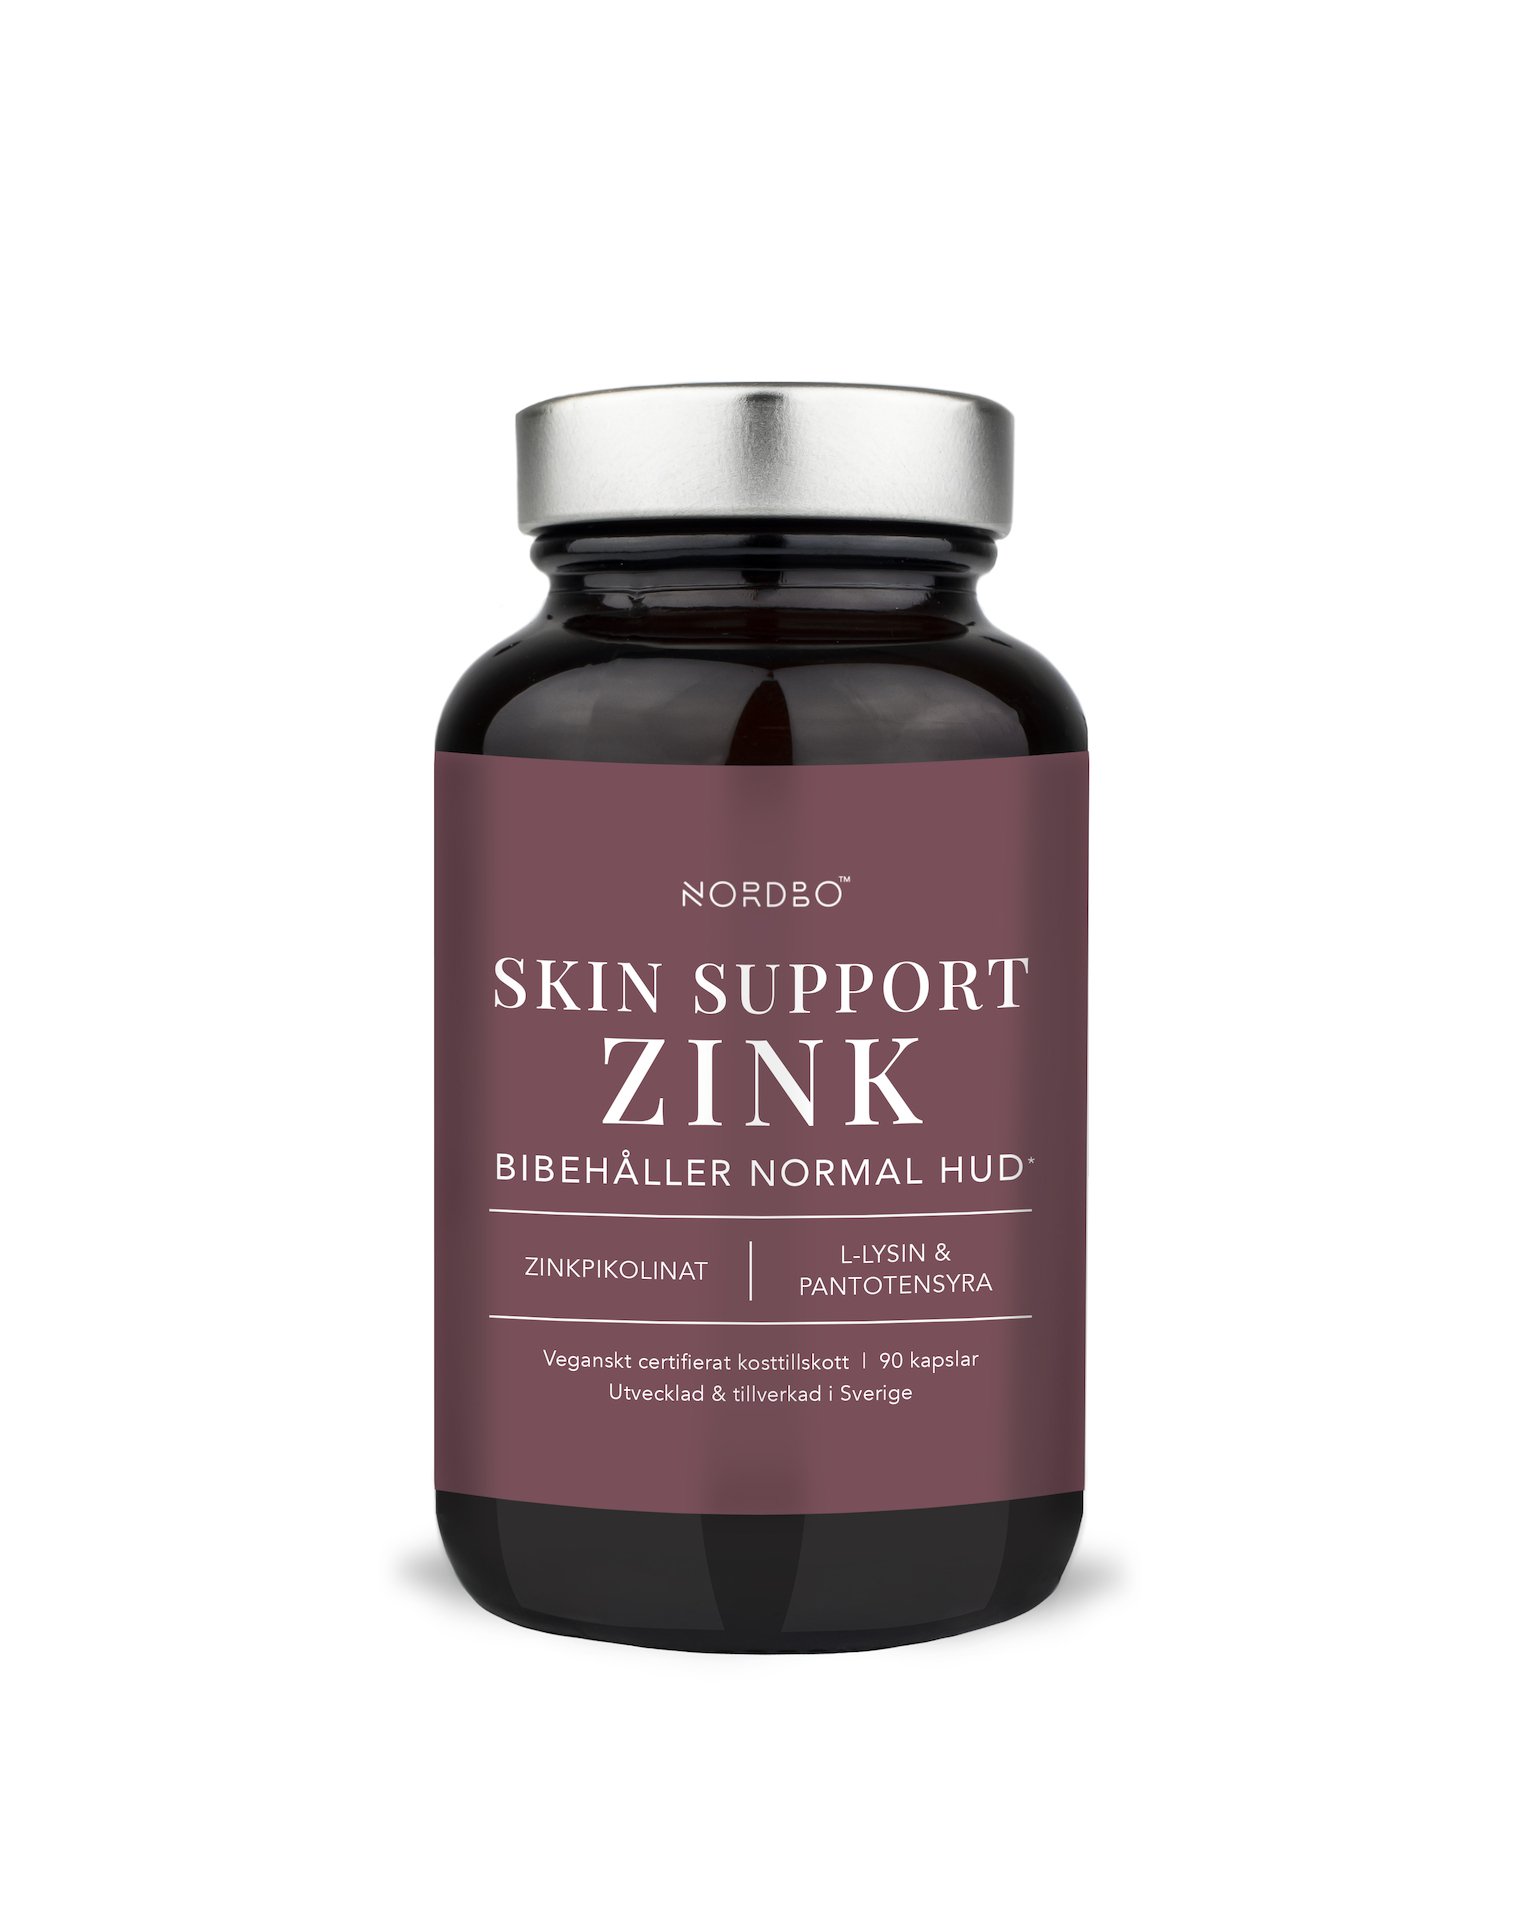 Nordbo Skin Support Zink, 90 kap